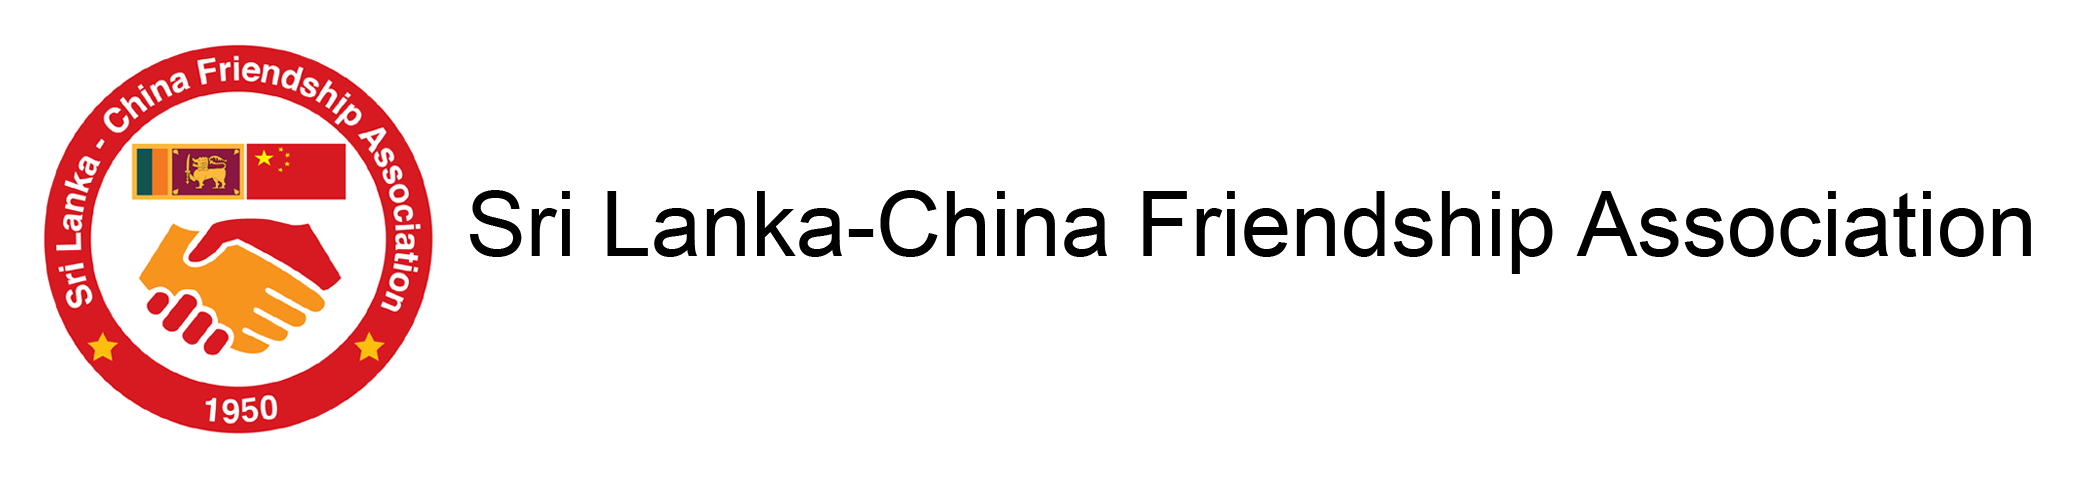 Sri Lanka-China Friendship Association